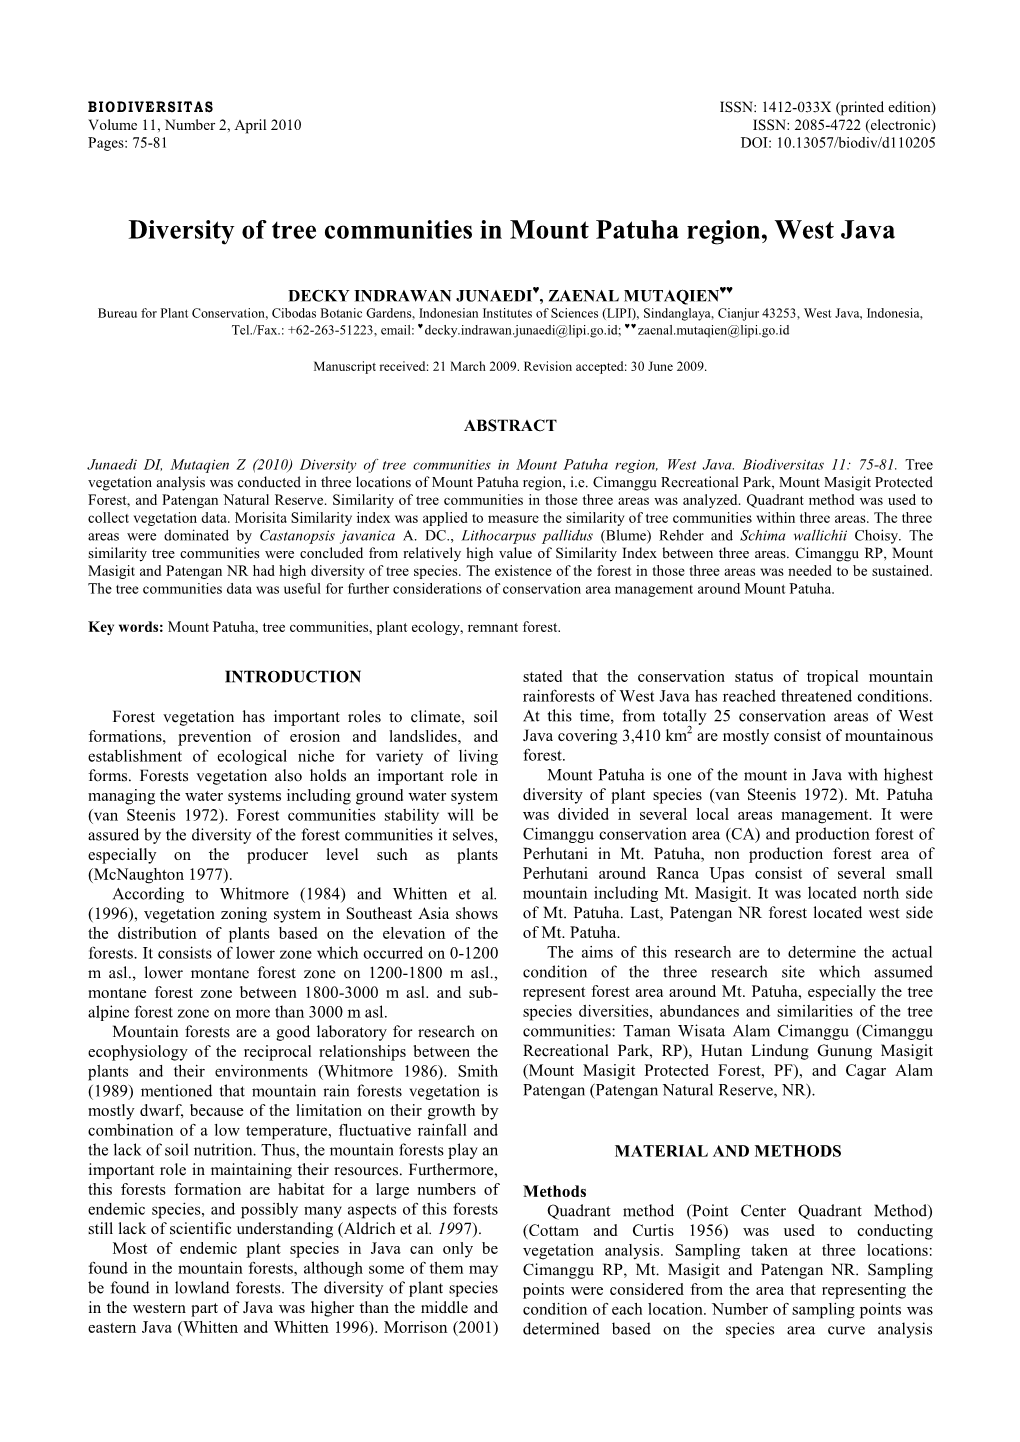 Diversity of Tree Communities in Mount Patuha Region, West Java